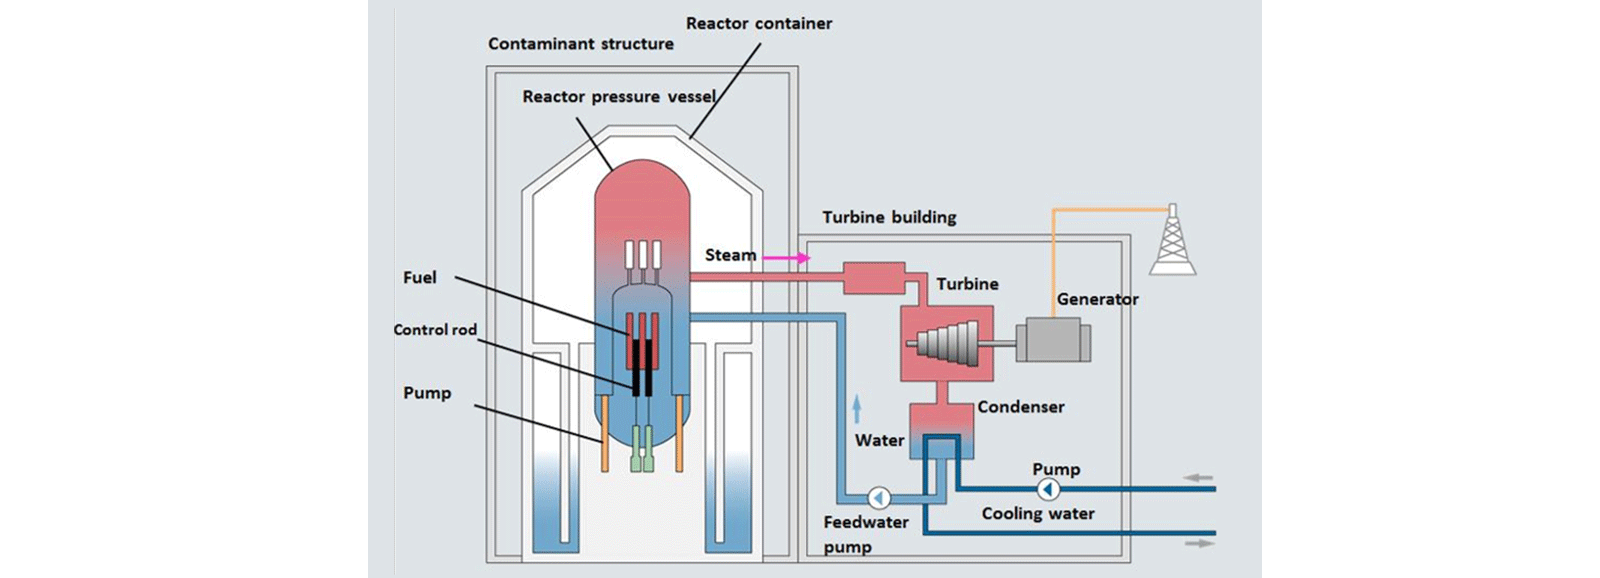 Kernkraftwerke: Siedewasserreaktor (SWR)